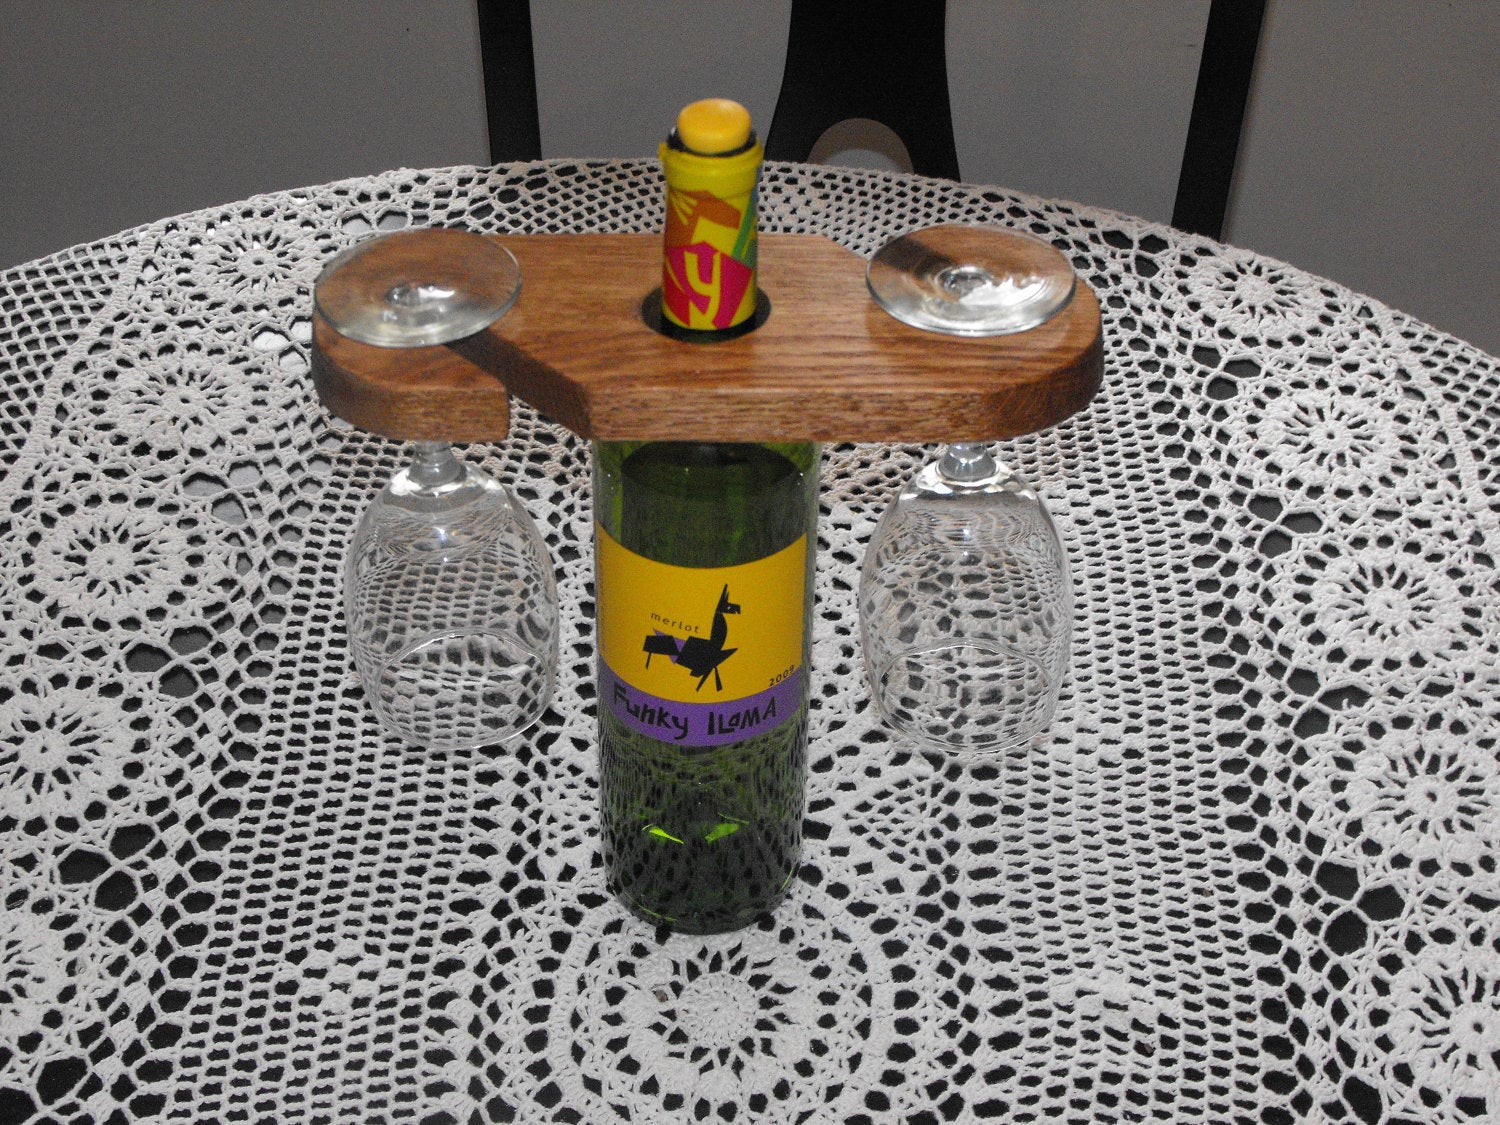 Best ideas about DIY Wine Bottle Rack
. Save or Pin Wine bottle glass holder wood handmade DIY home decor urban Now.